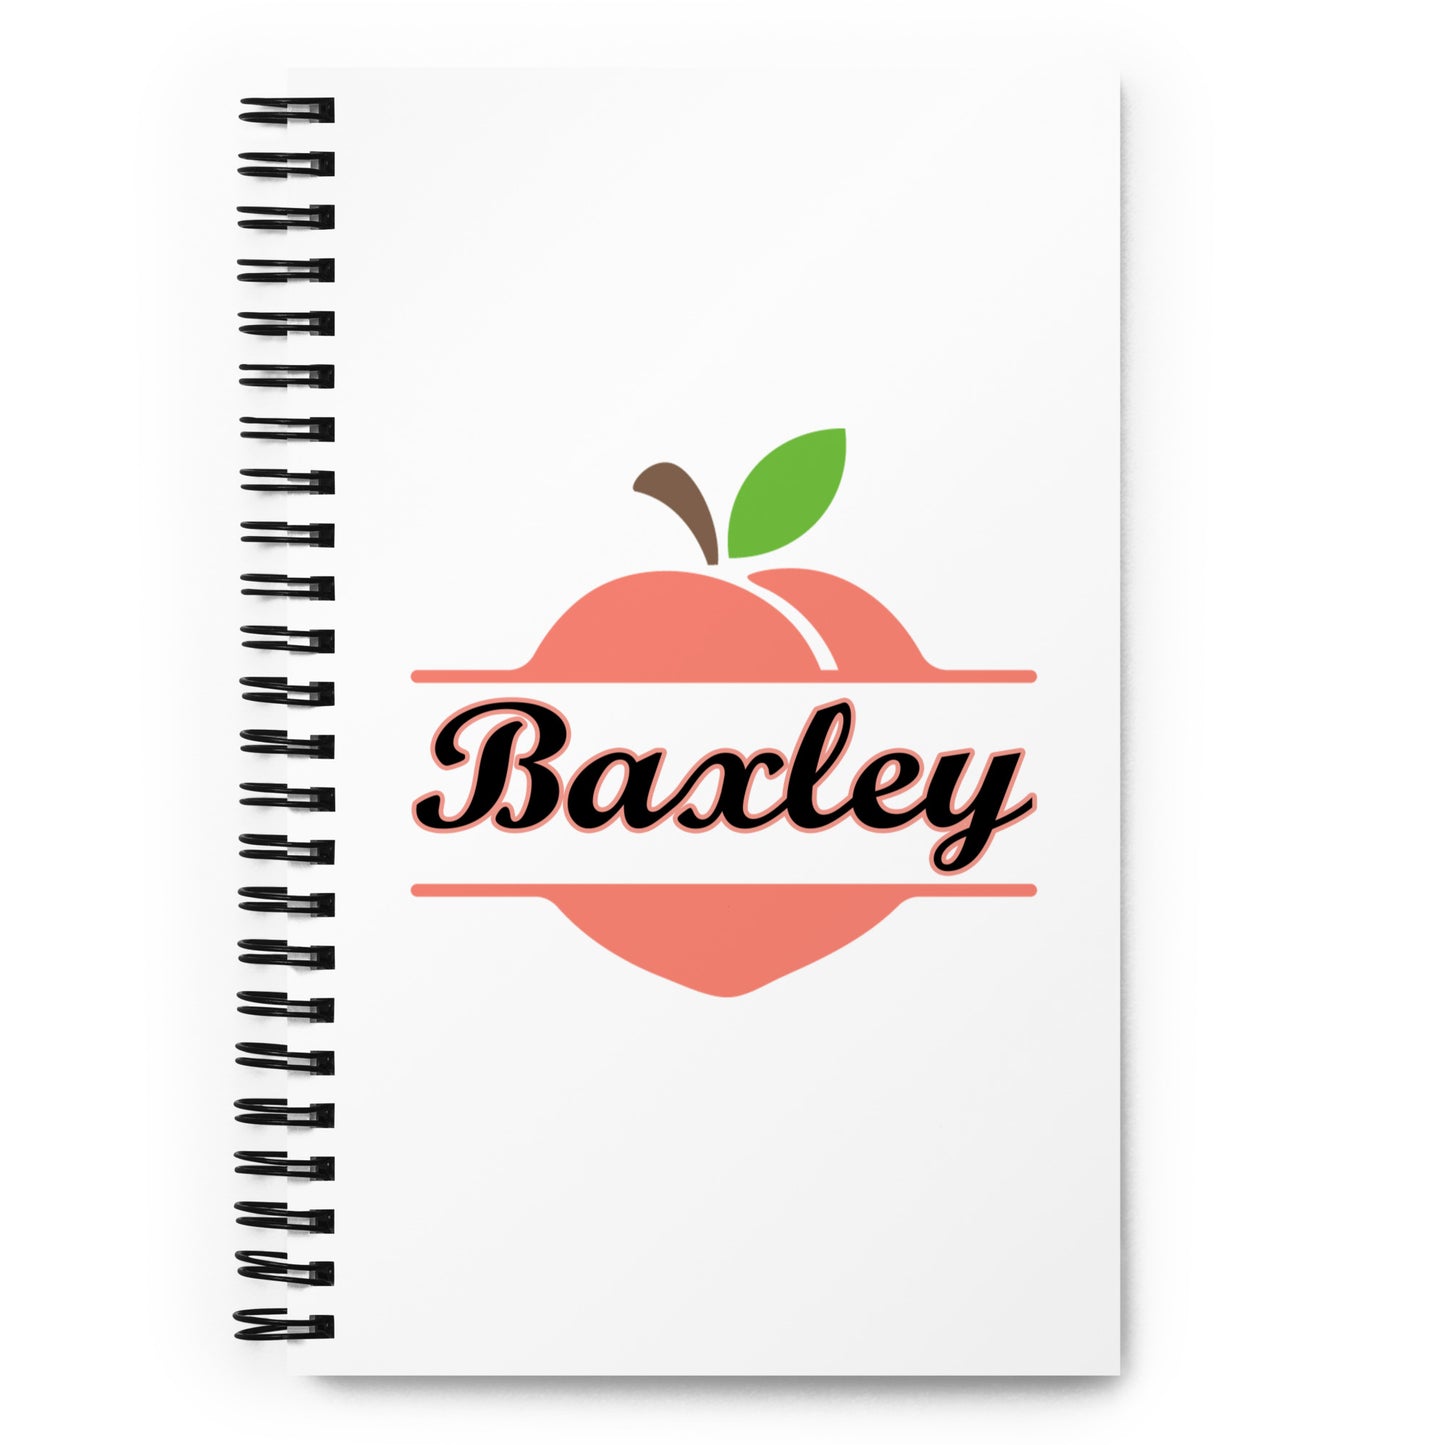 Baxley Georgia - Town Name on Peach Spiral Notebook